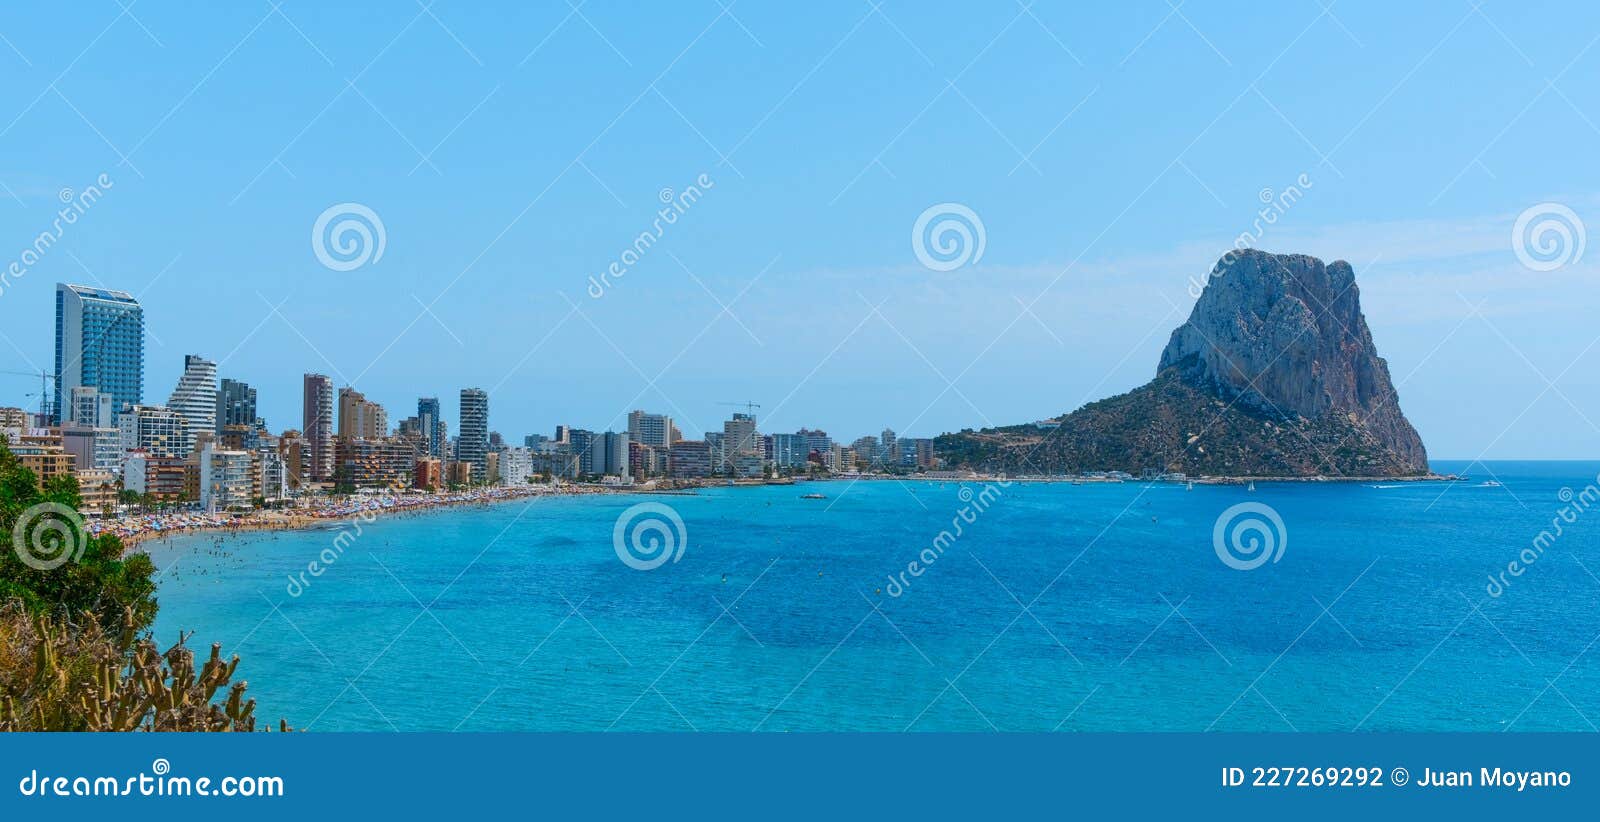 panoramic view of calp, valencian community, spain